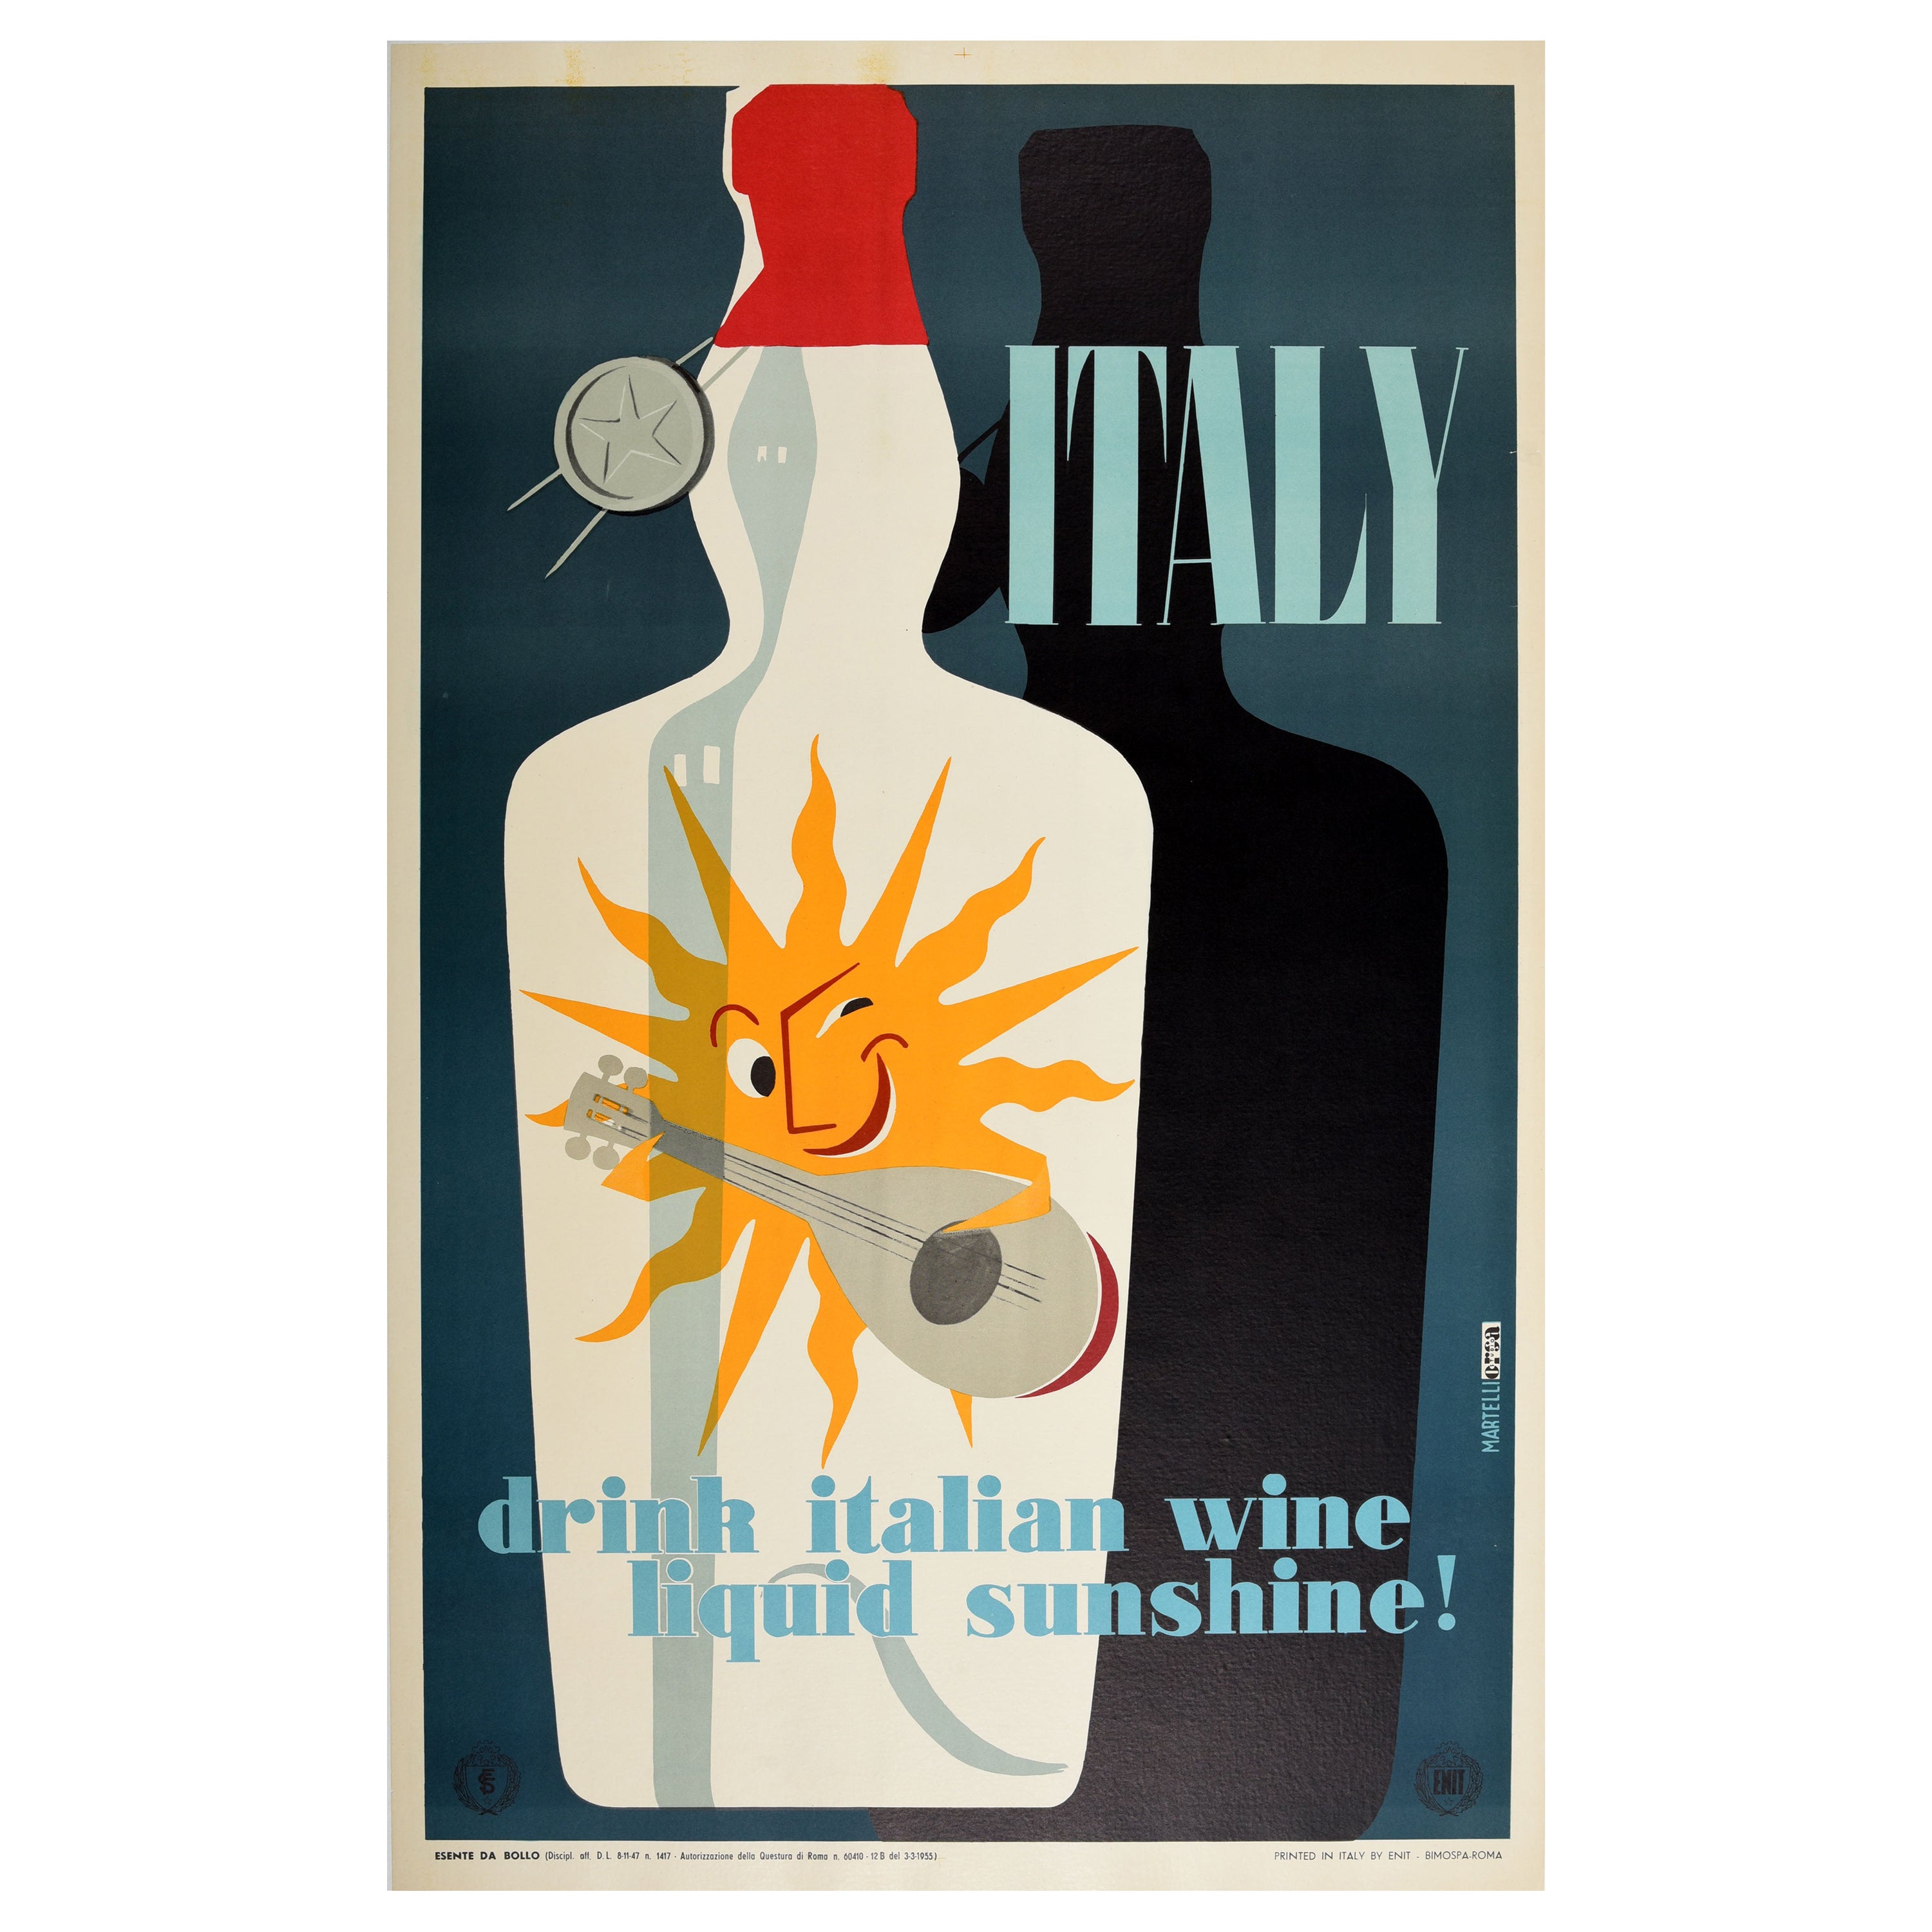 Original Vintage Poster For Italy Drink Italian Wine Liquid Sunshine Travel Art